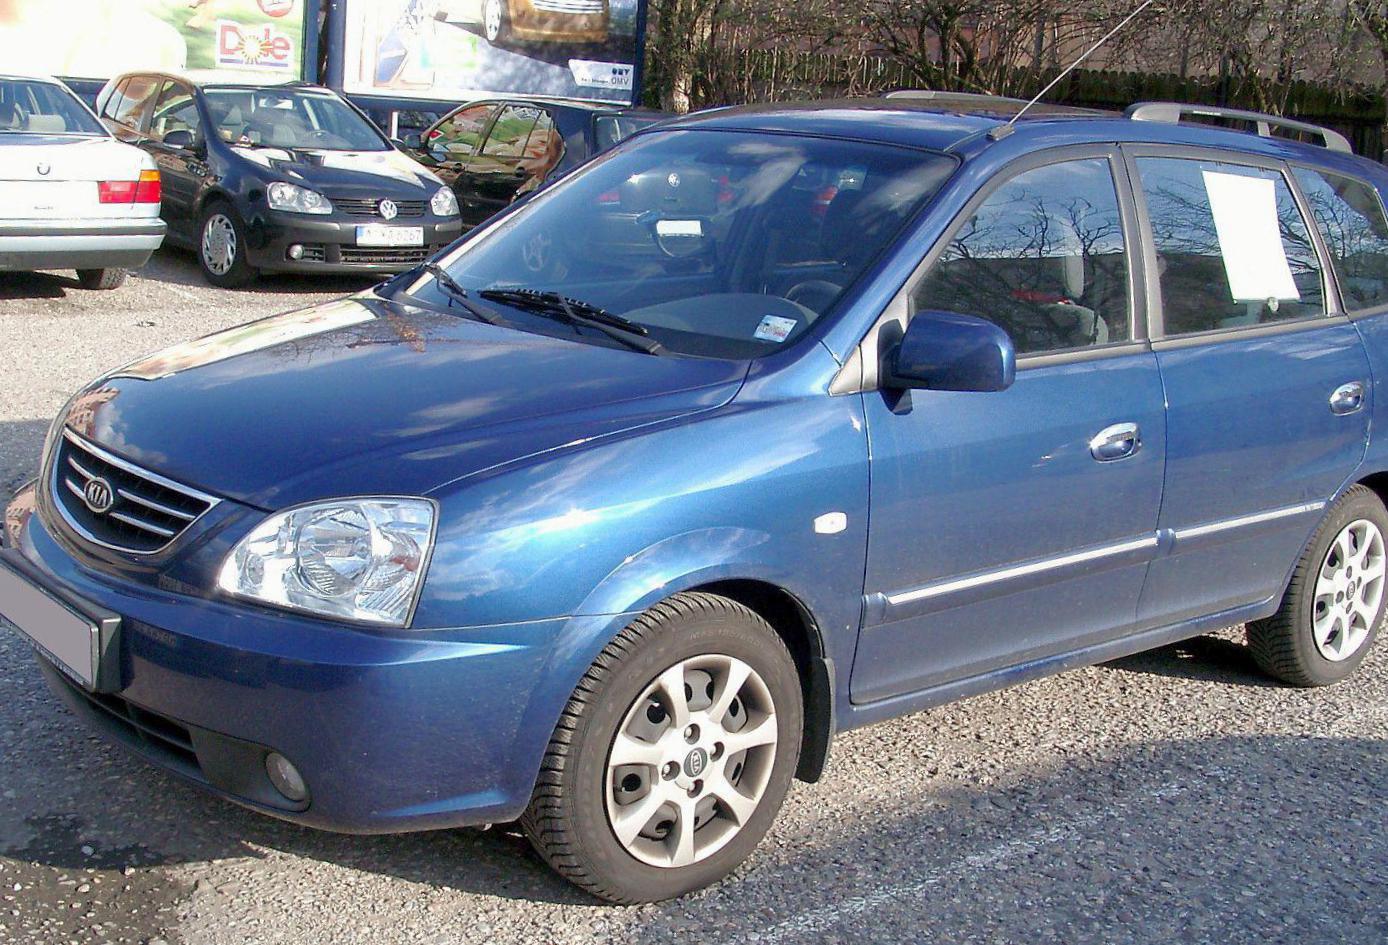 KIA Carens used minivan